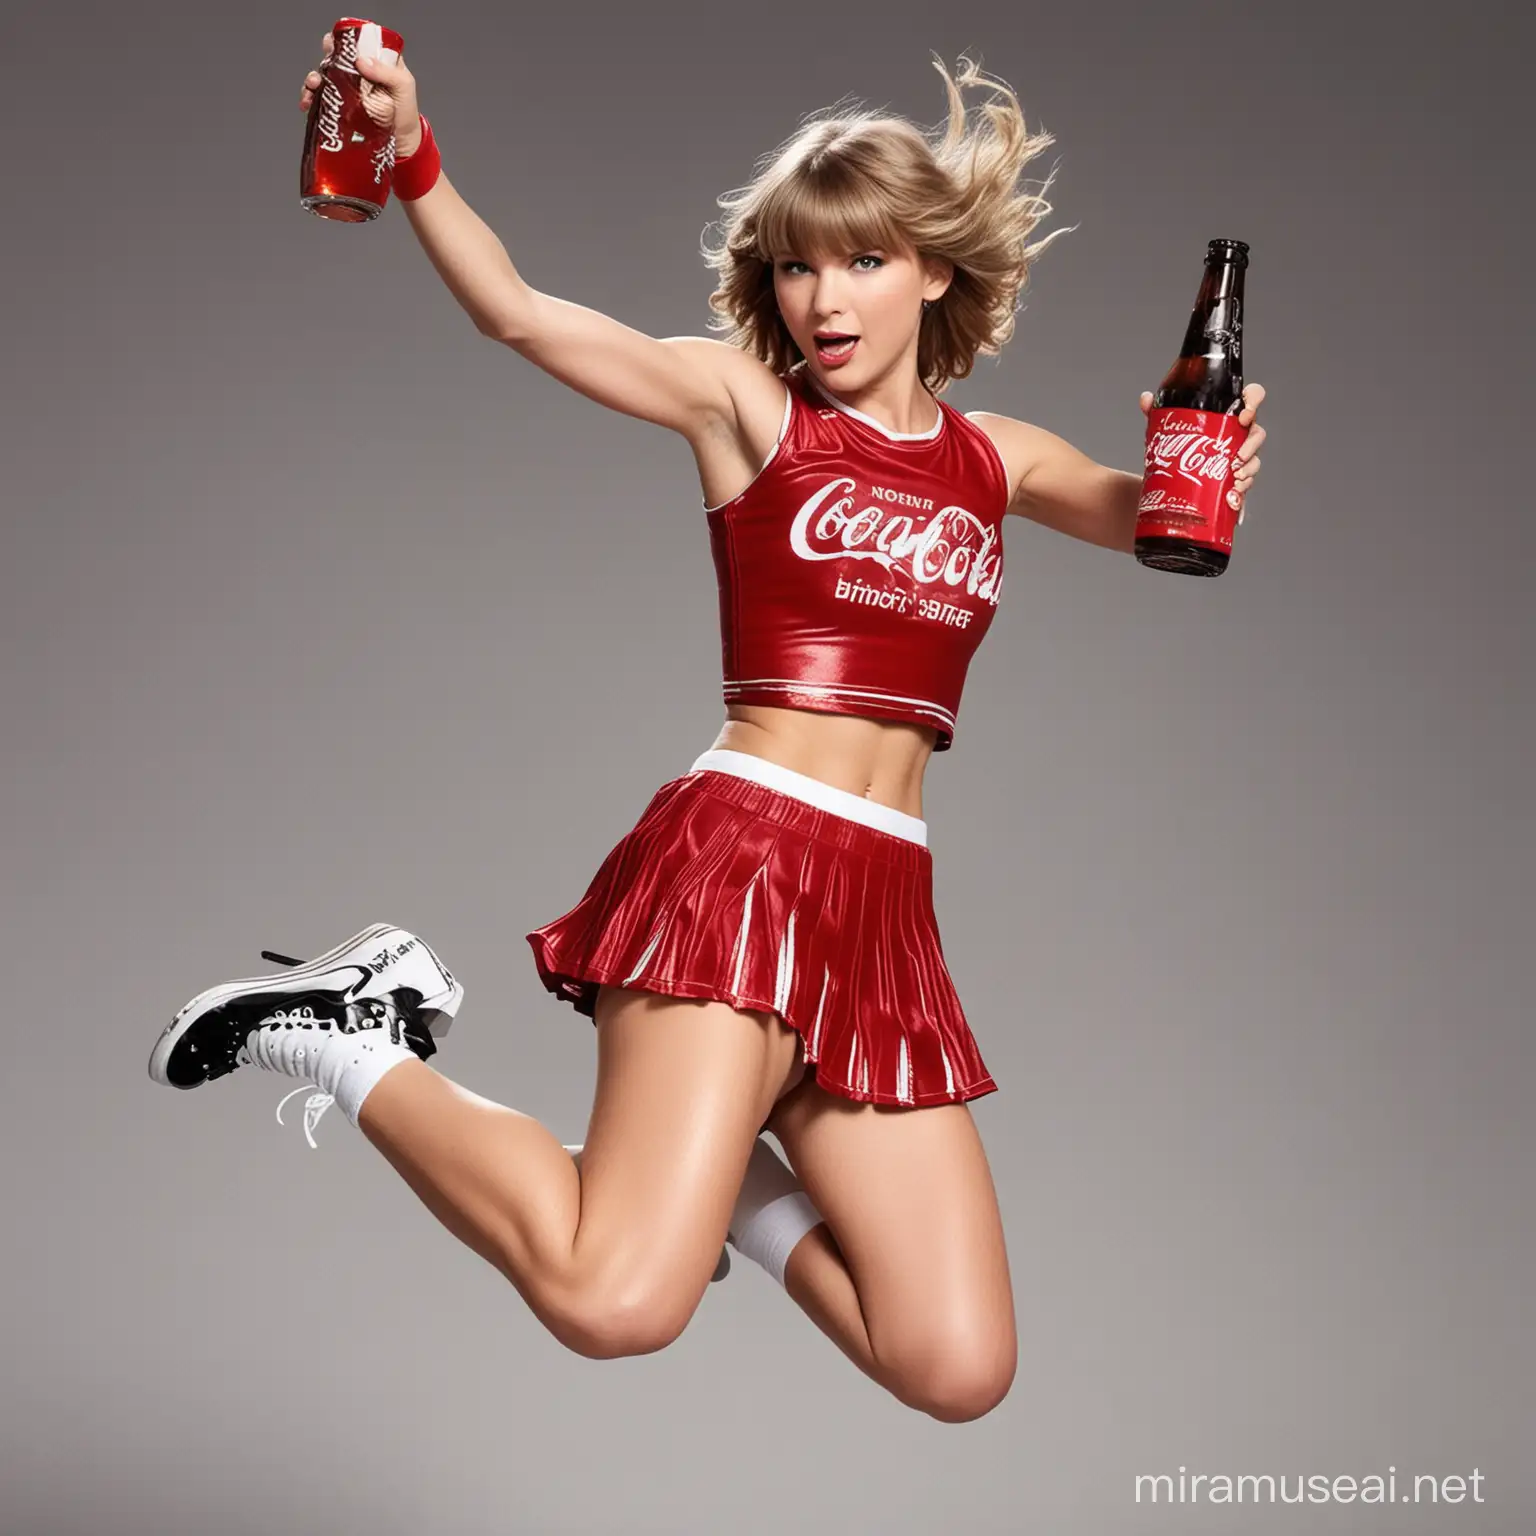 Cheerleader Taylor Swift in MidAir Coke Drinking Moment